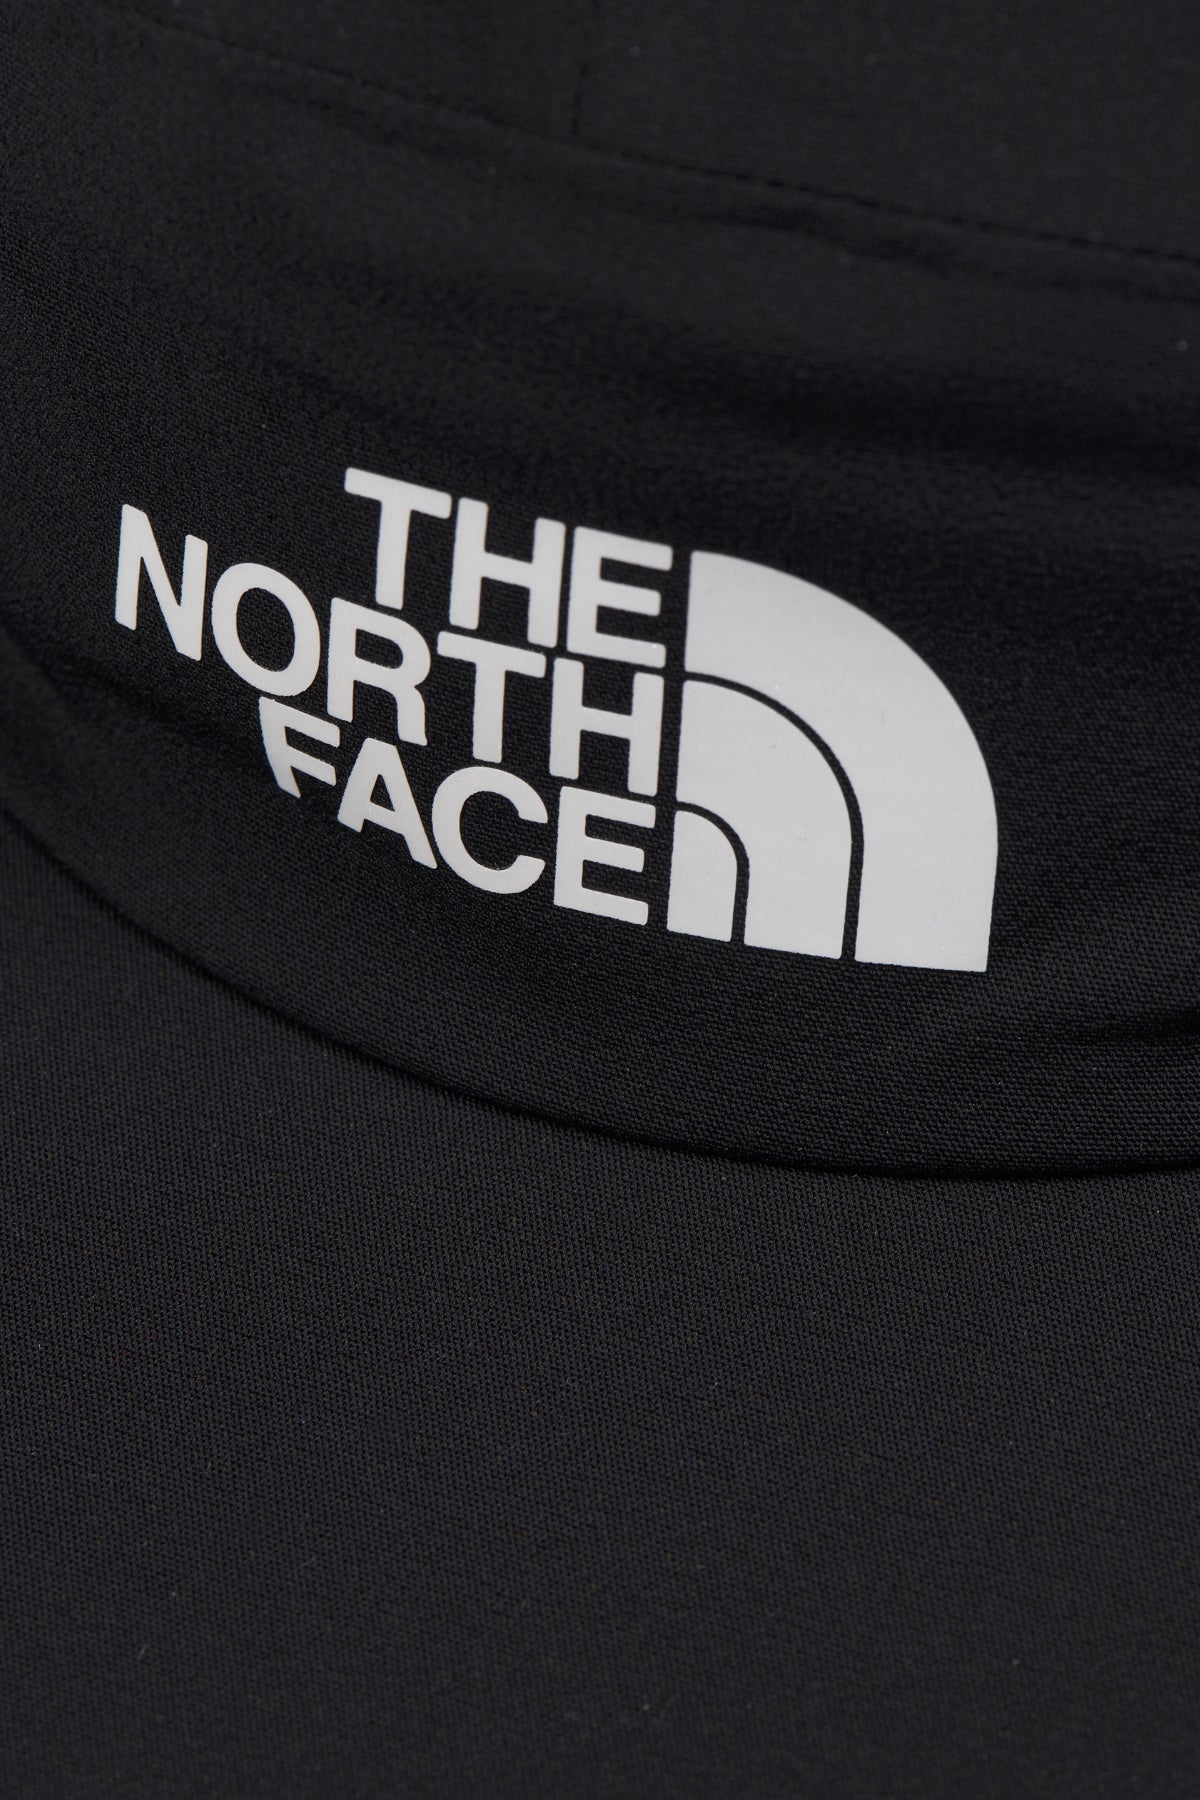 THE NORTH FACE - FLIGHT SERIES BALL CAP